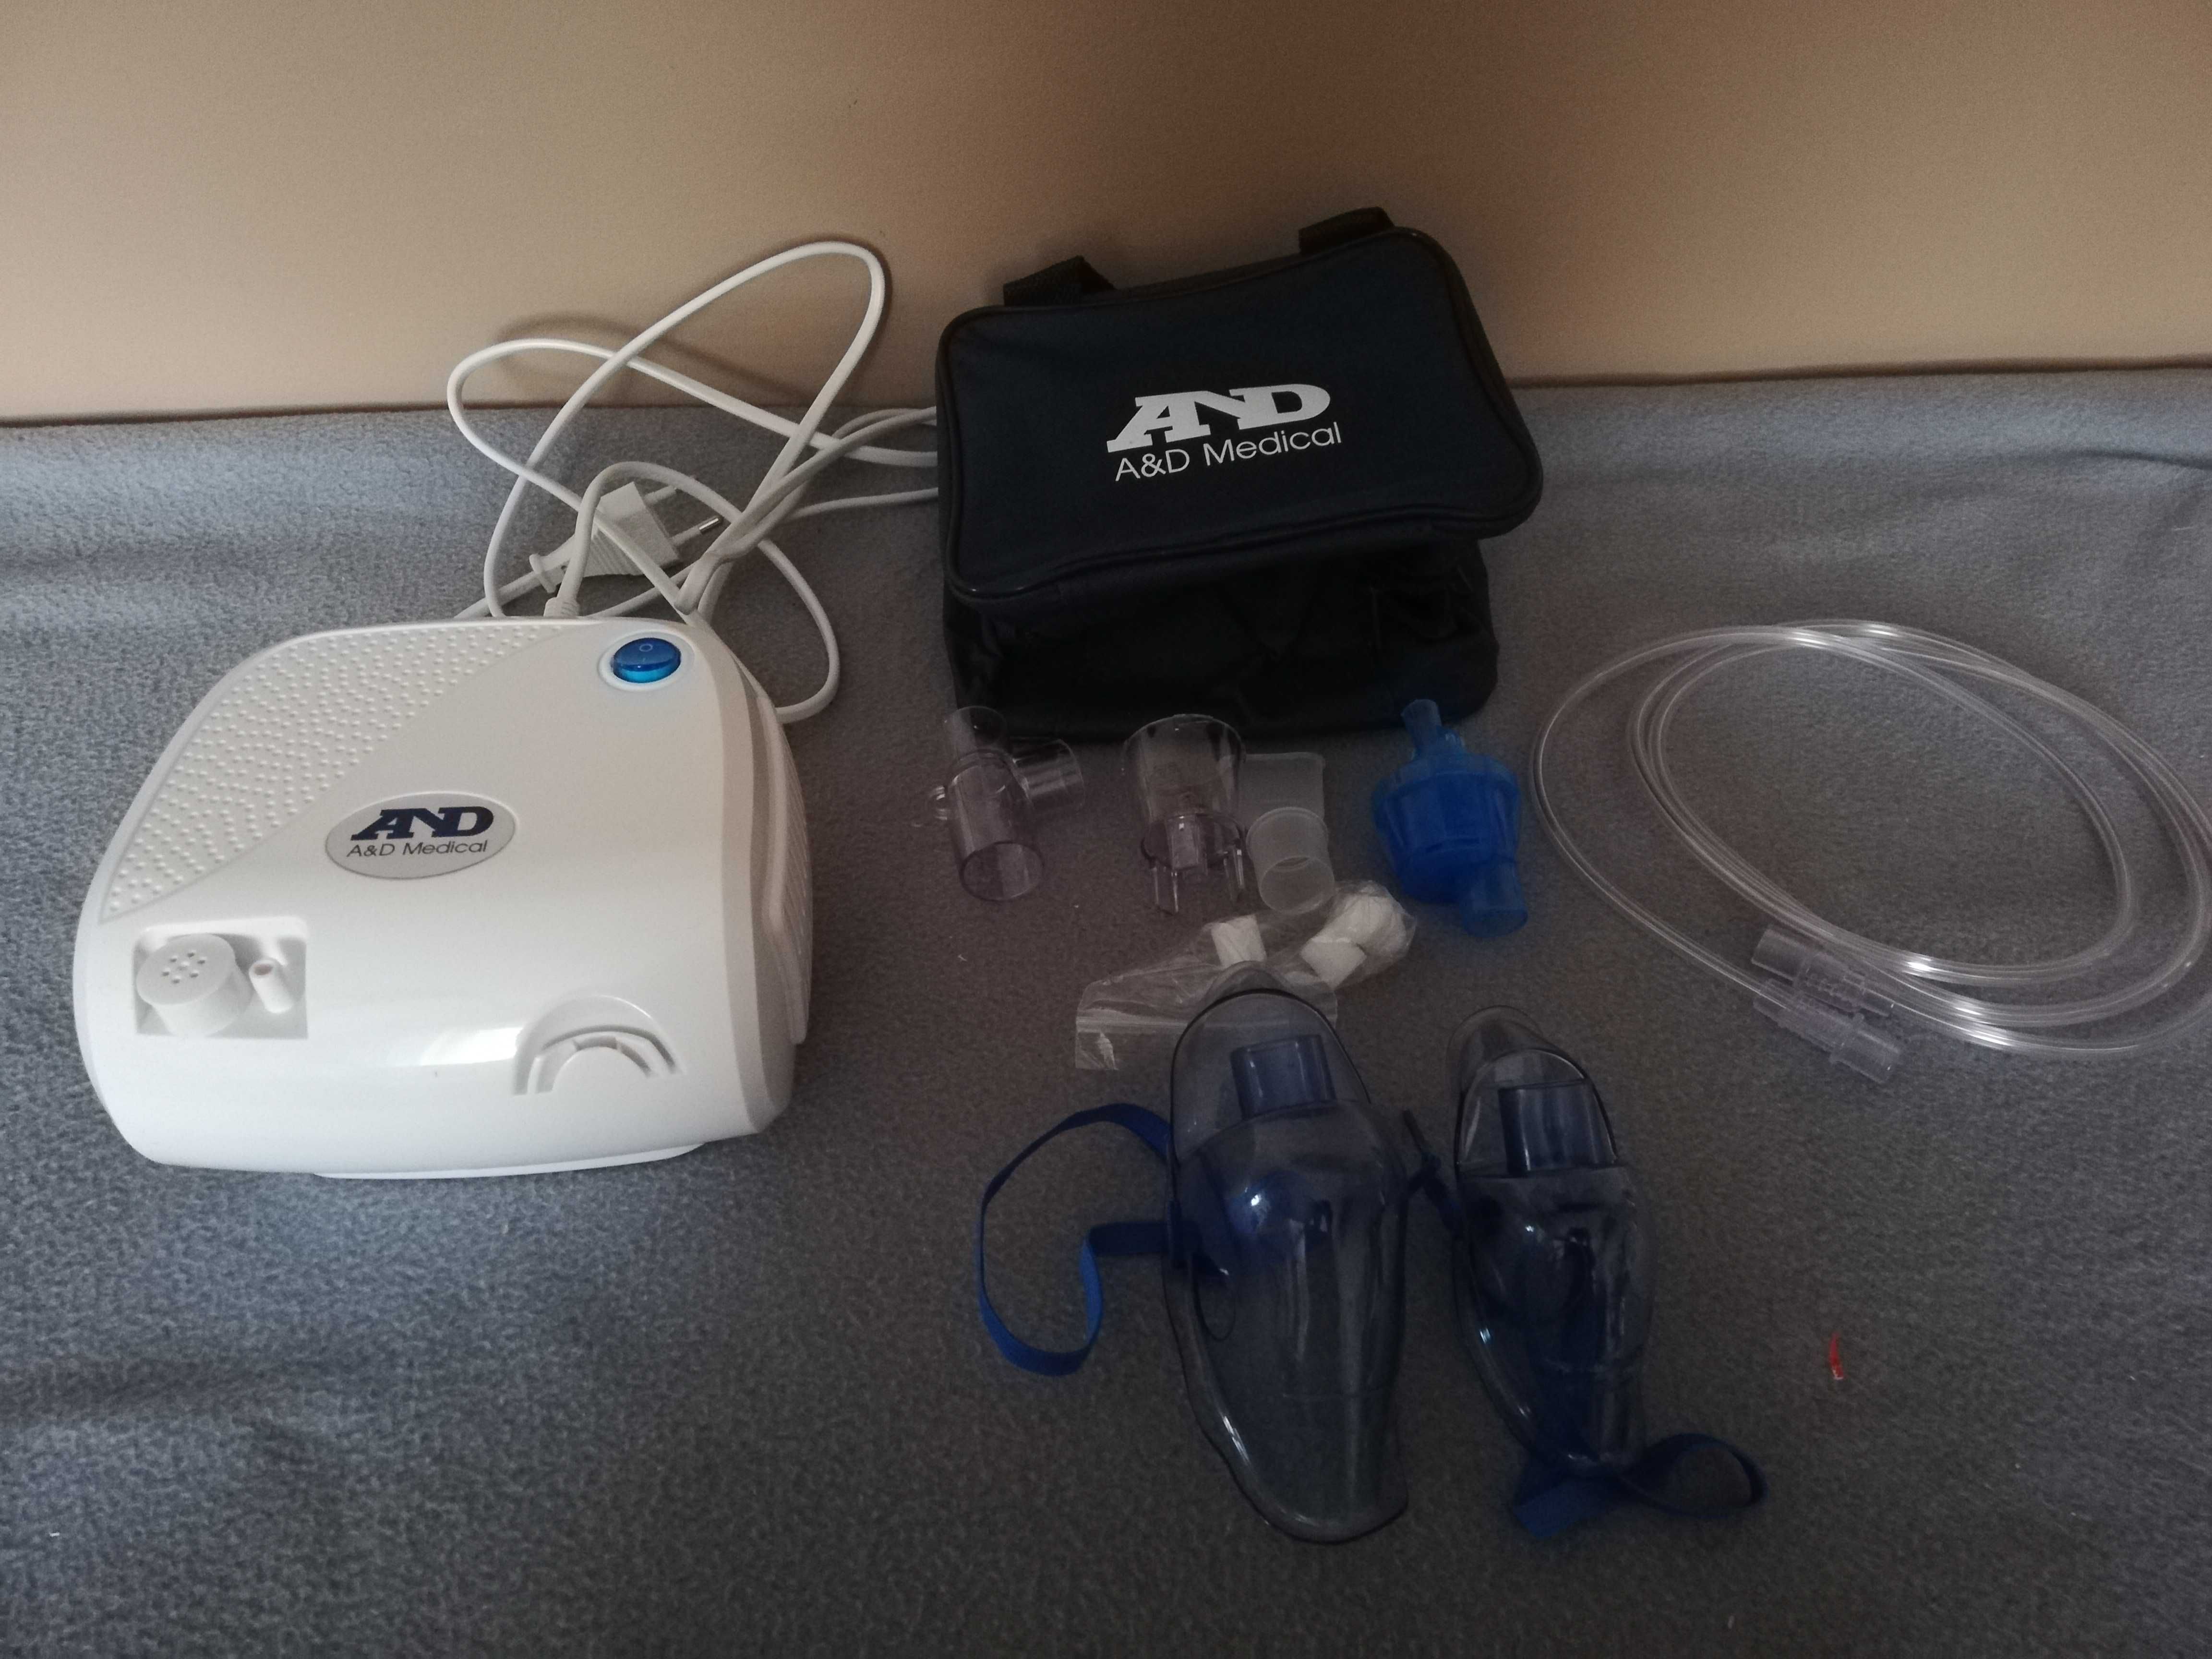 A&D Medical UN-014 nebulizator/ inhalator